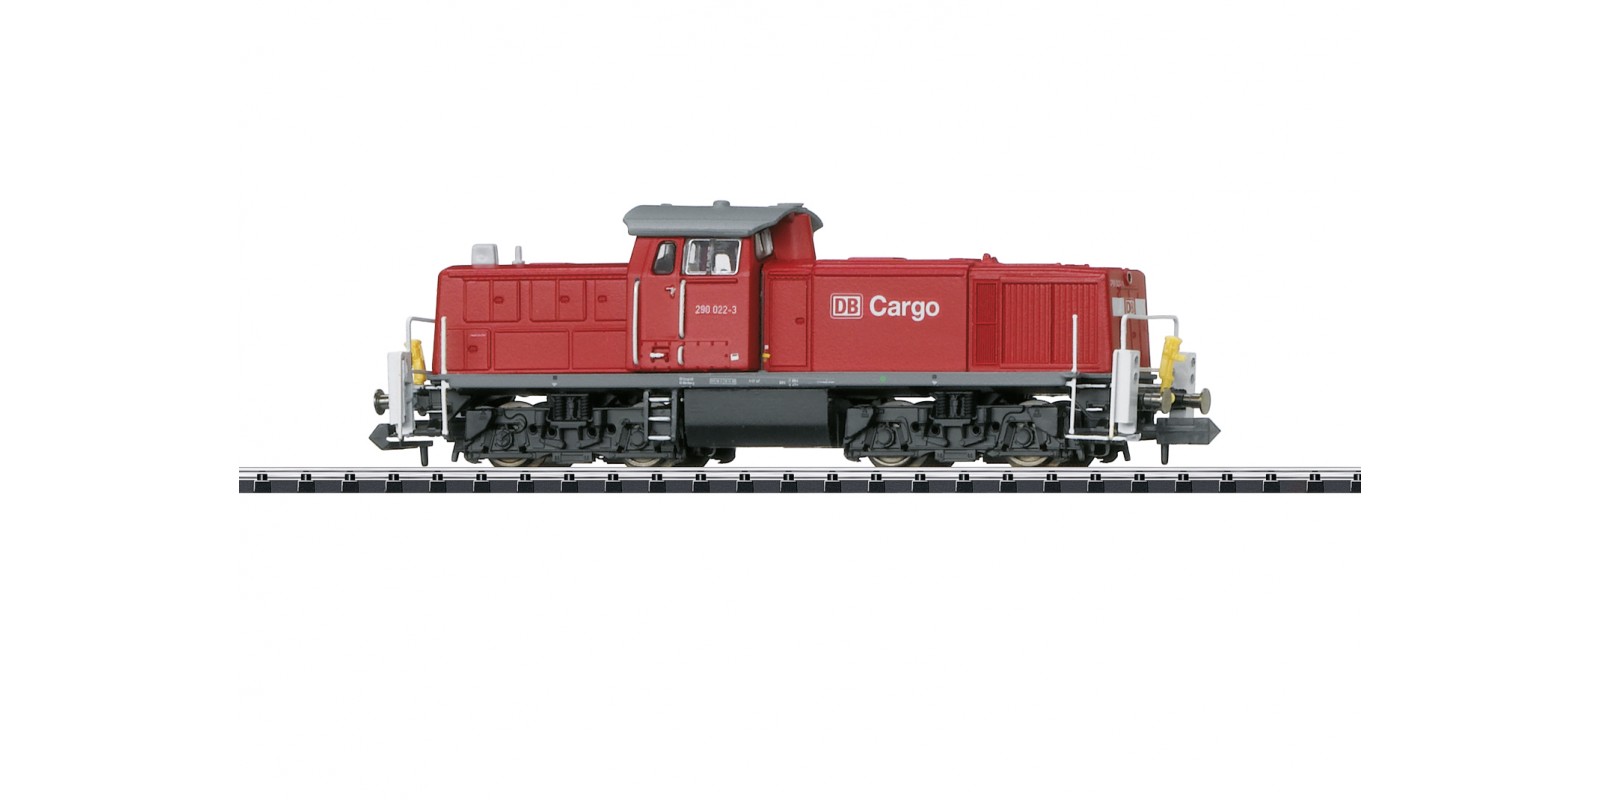 T16293 Class 290 Diesel Locomotive